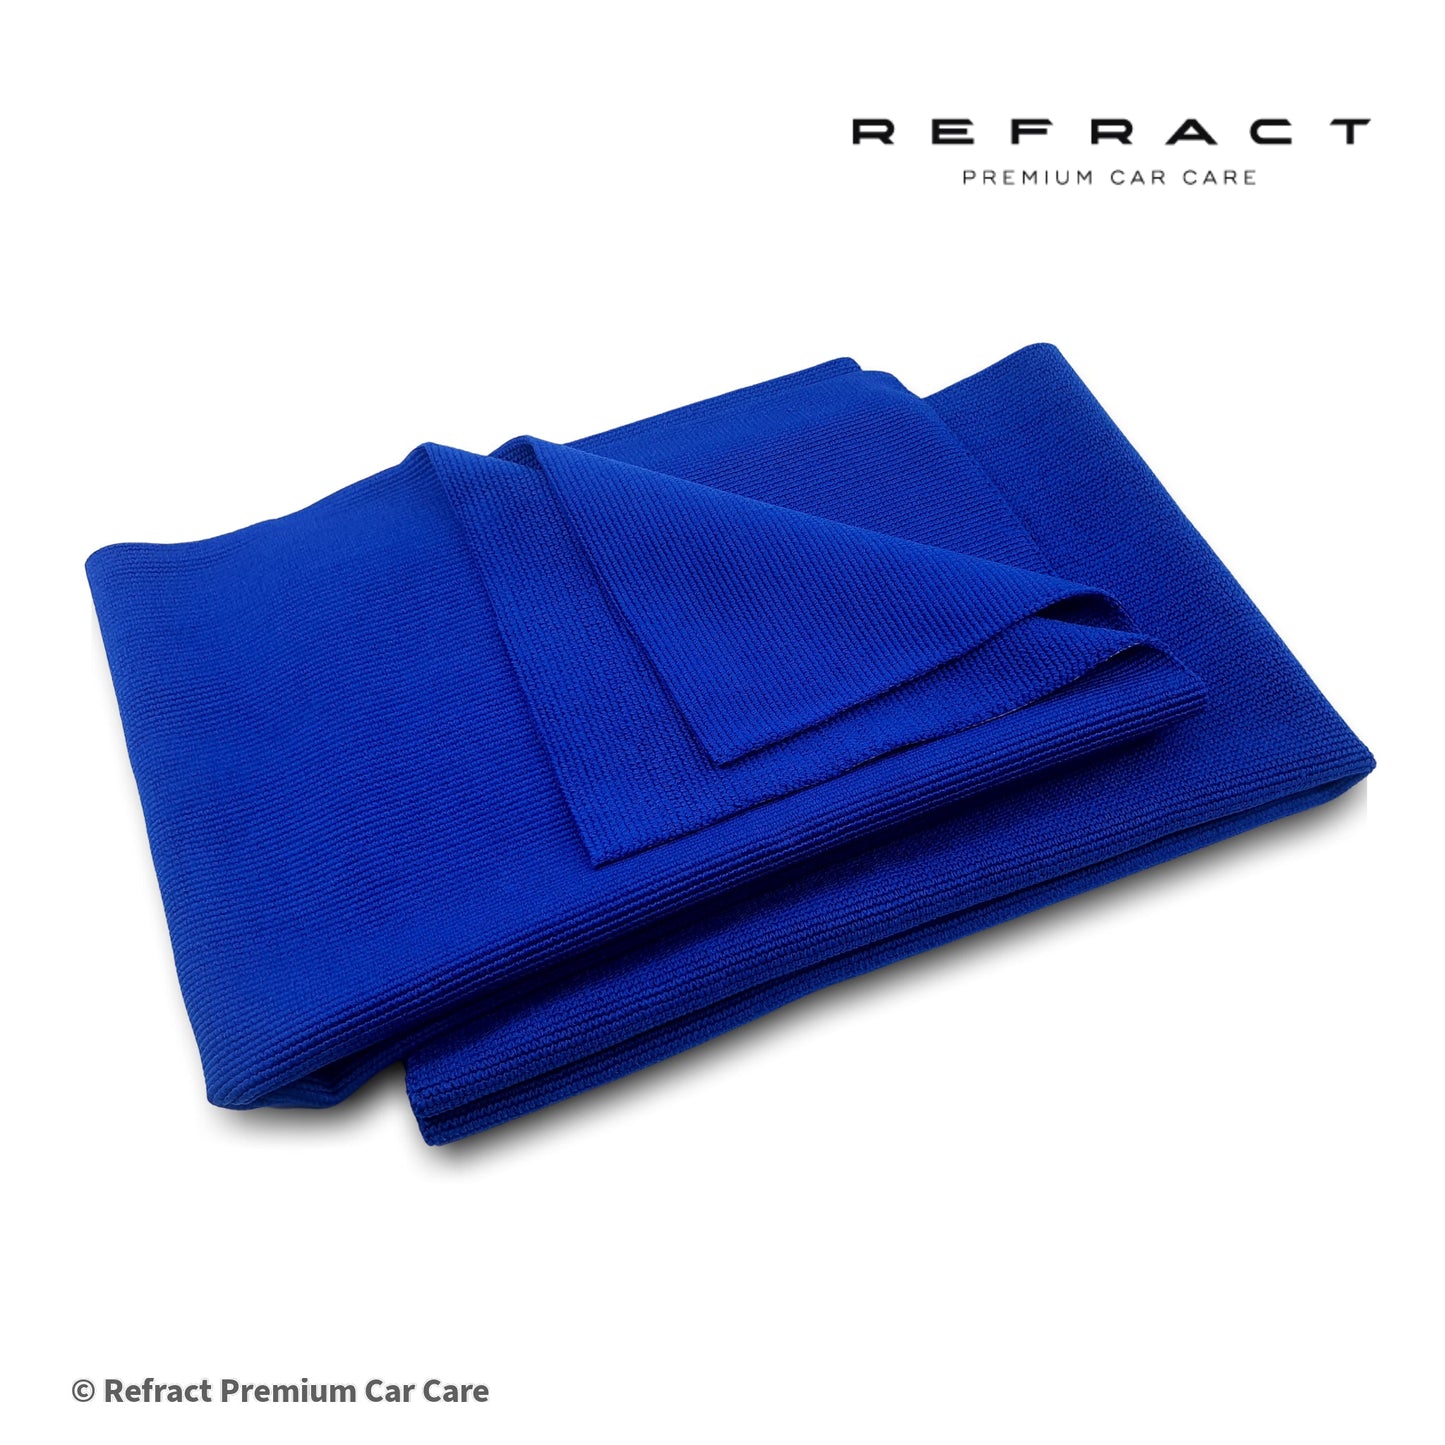 Refract Premium Car Care Products Multi Purpose Edgeless Microfiber Towels $6.95